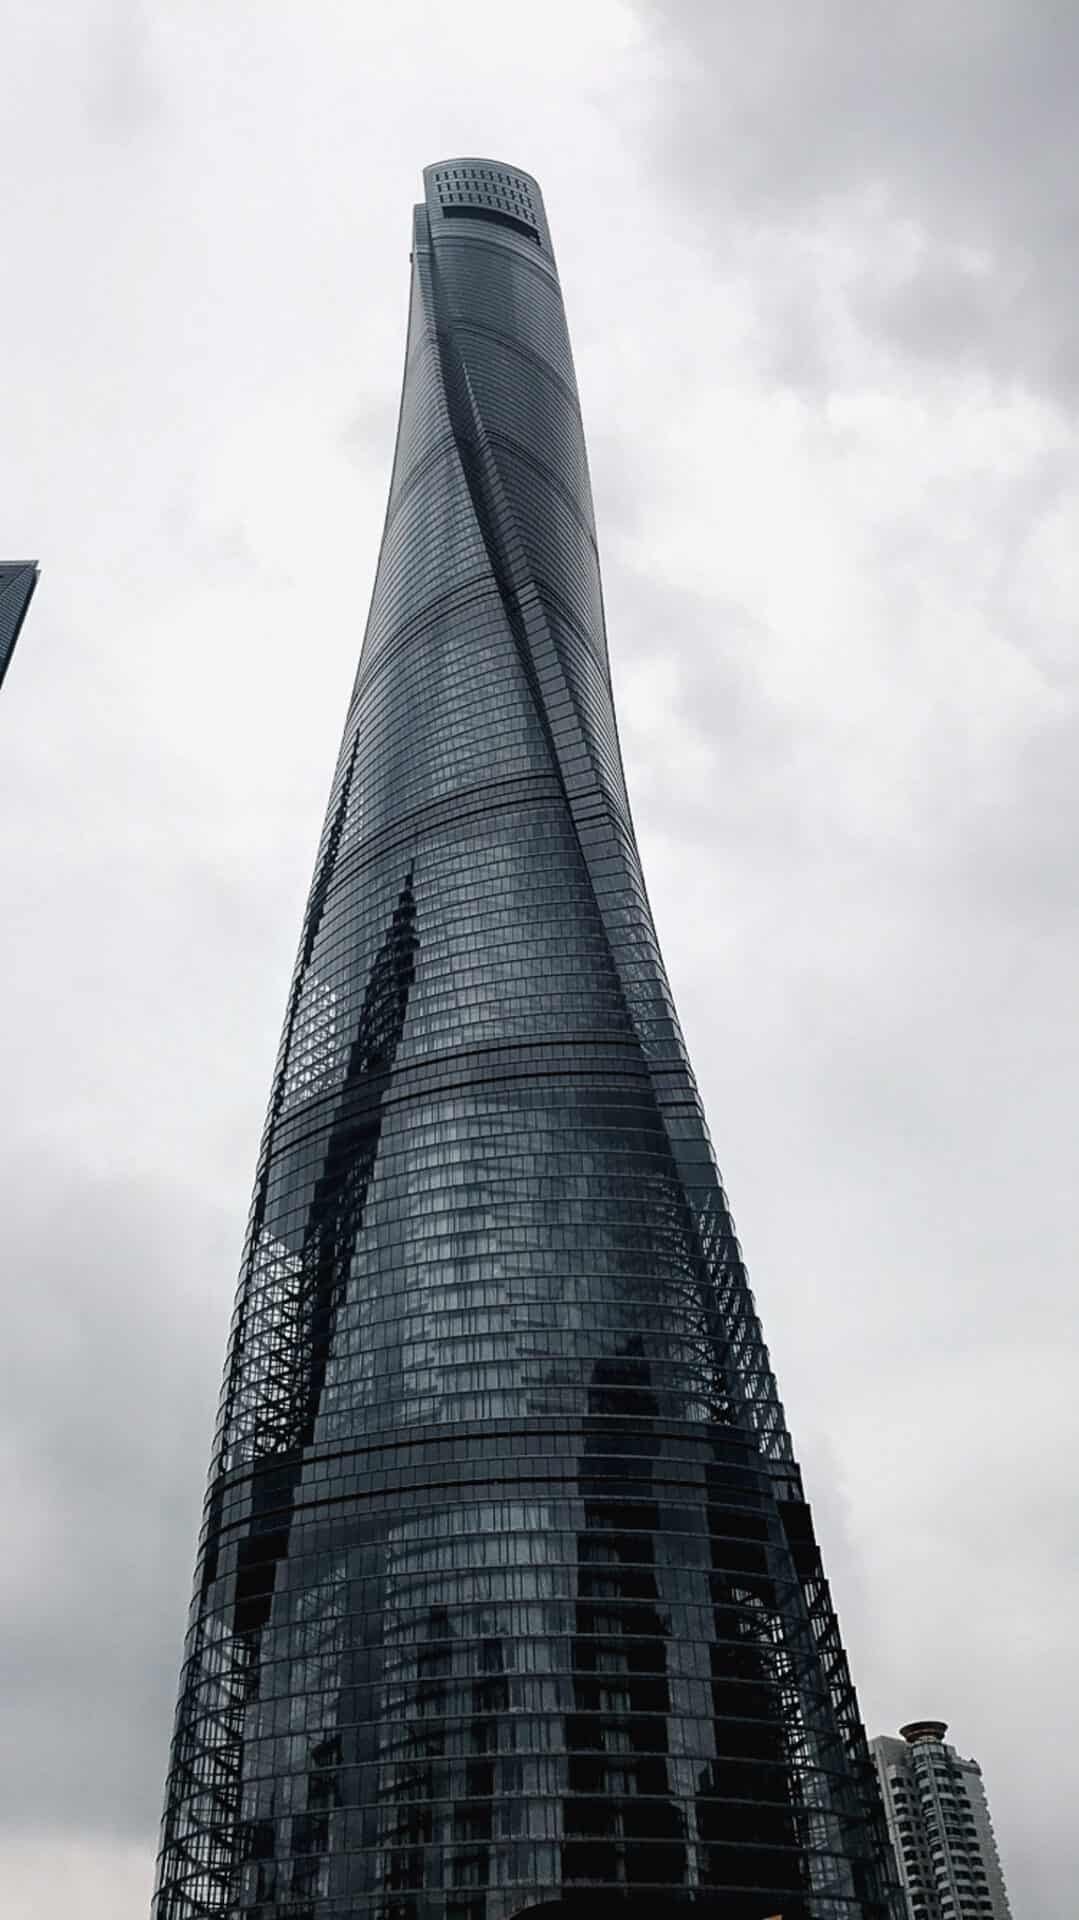 Shanghai tower on overcast moody day